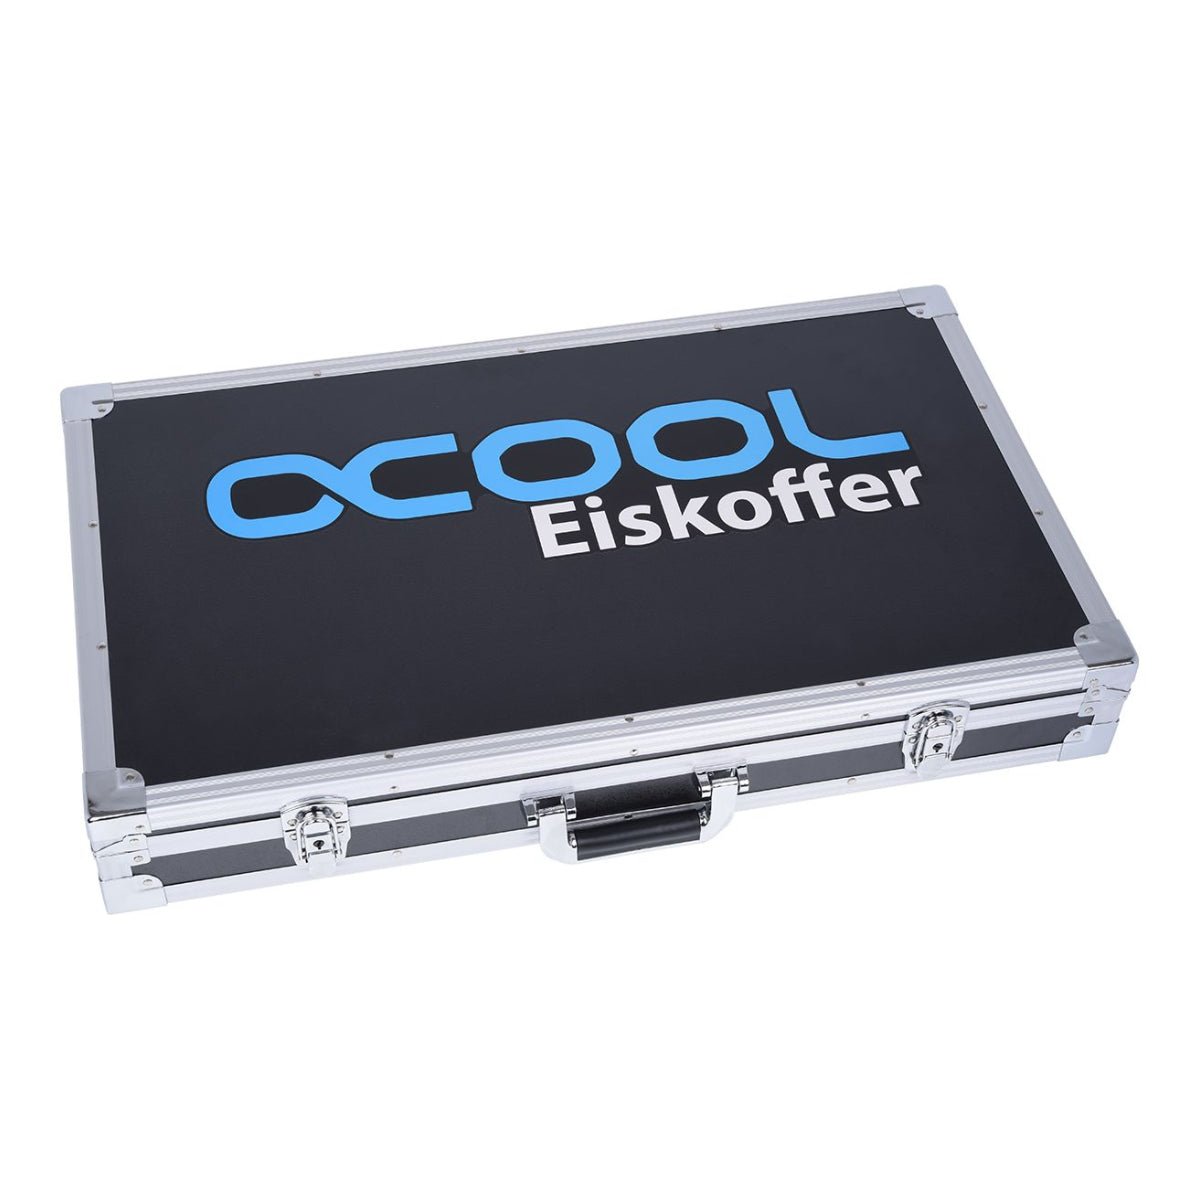 Alphacool Eiskoffer Professional bending & measuring kit - Store 974 | ستور ٩٧٤